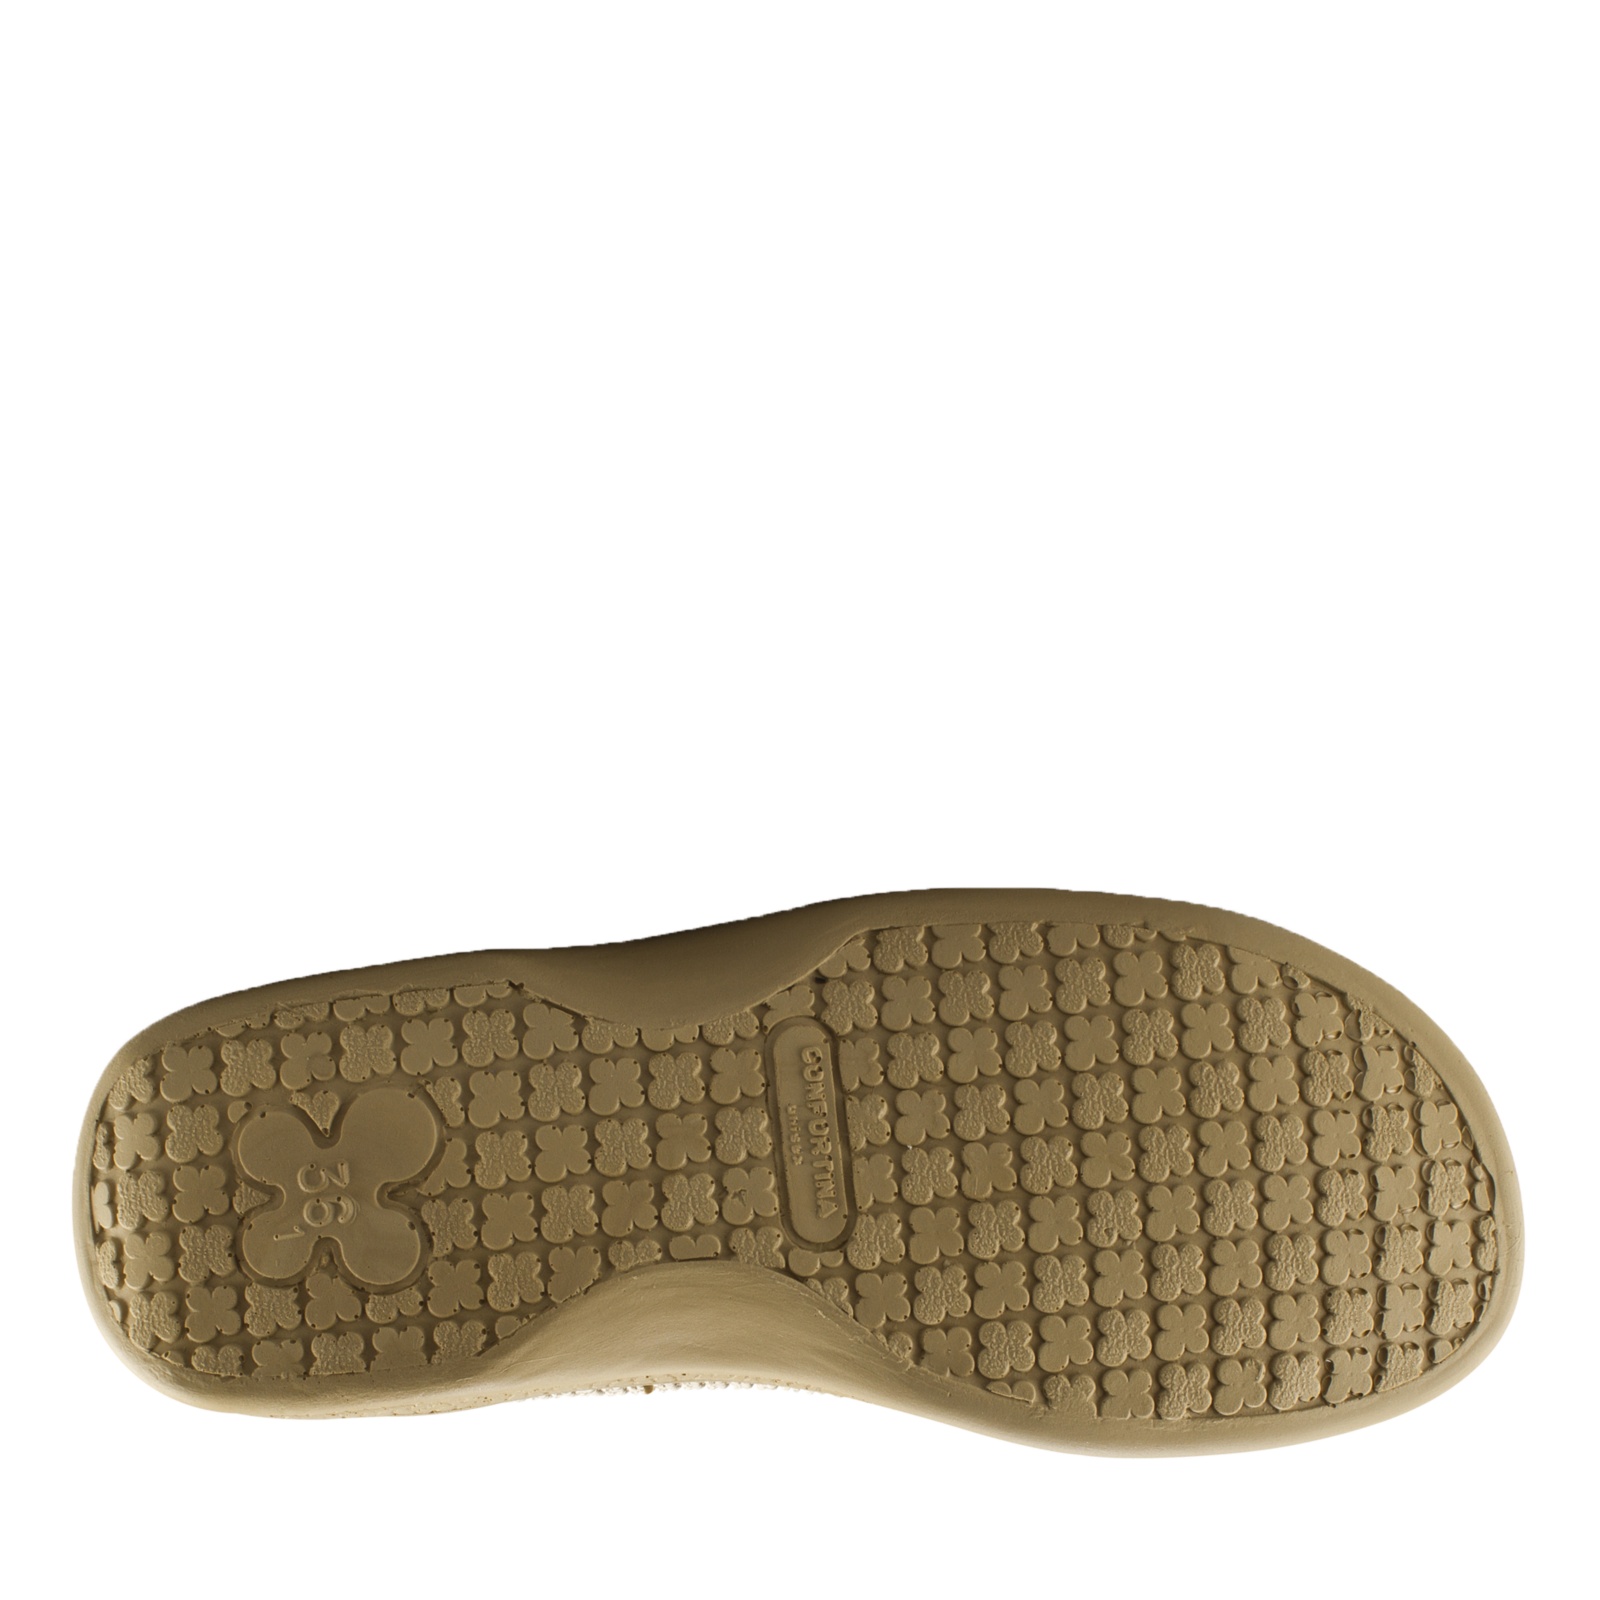 Confortina Women's Slip on Shoes | eBay